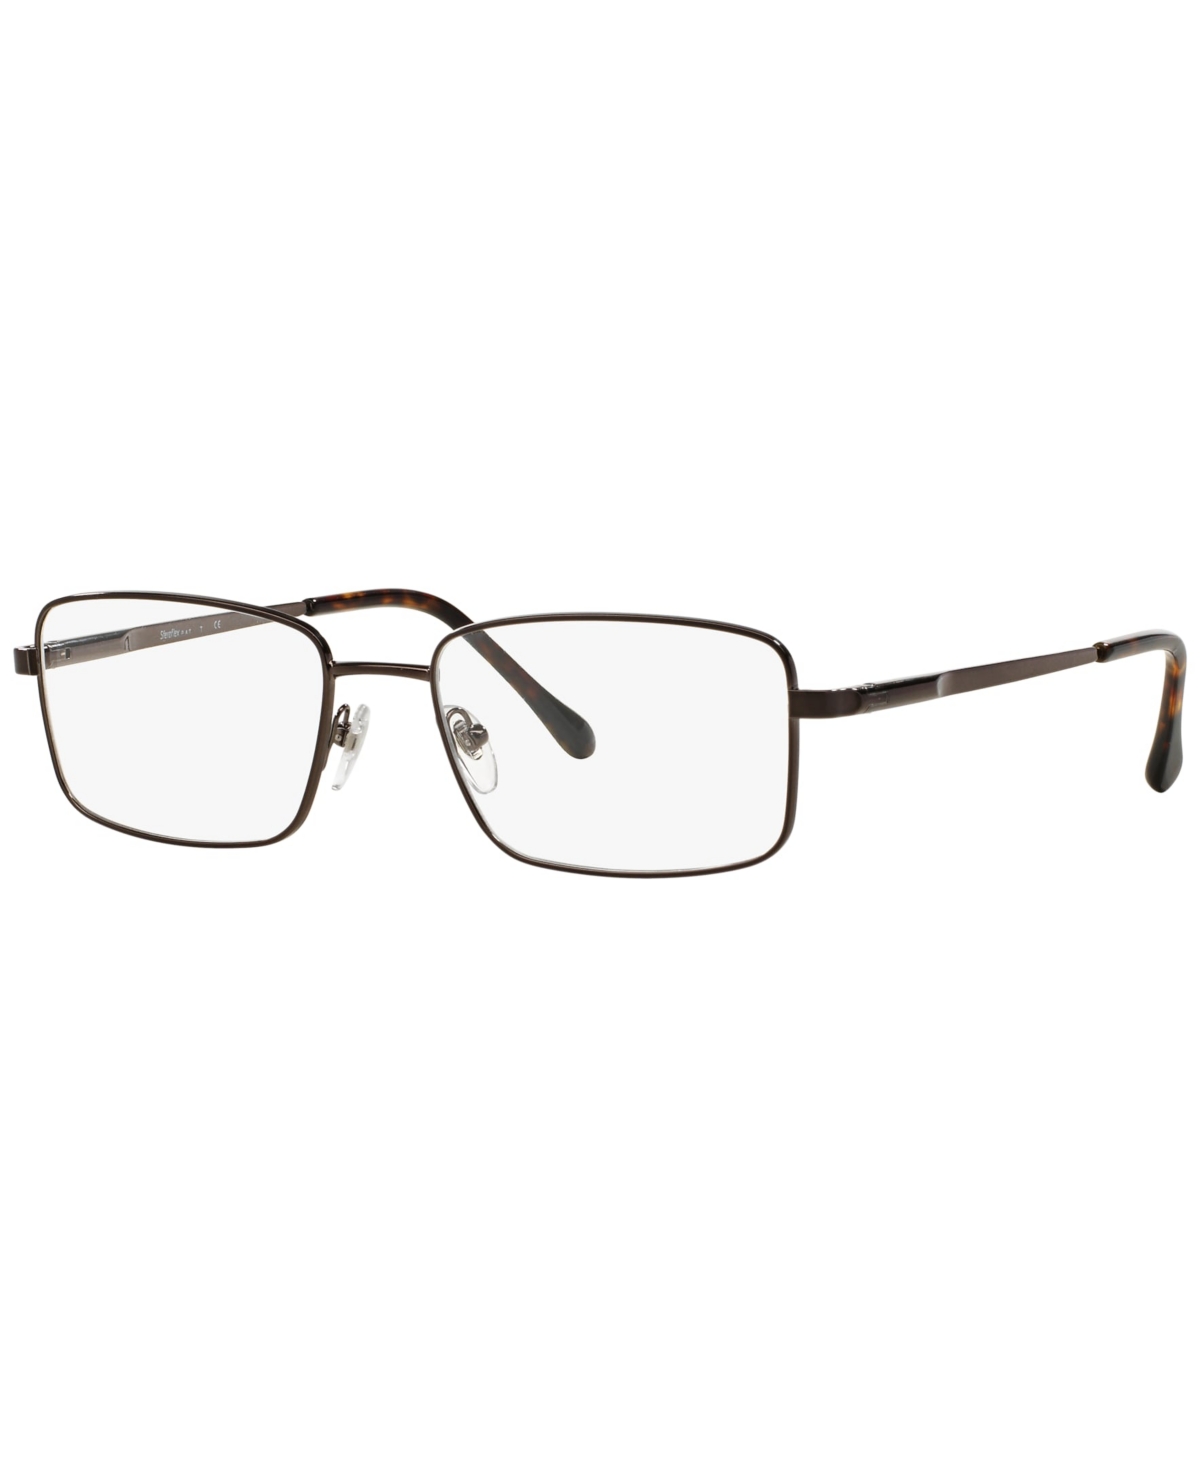 Steroflex Men's Eyeglasses, SF2271 - Dark Blue